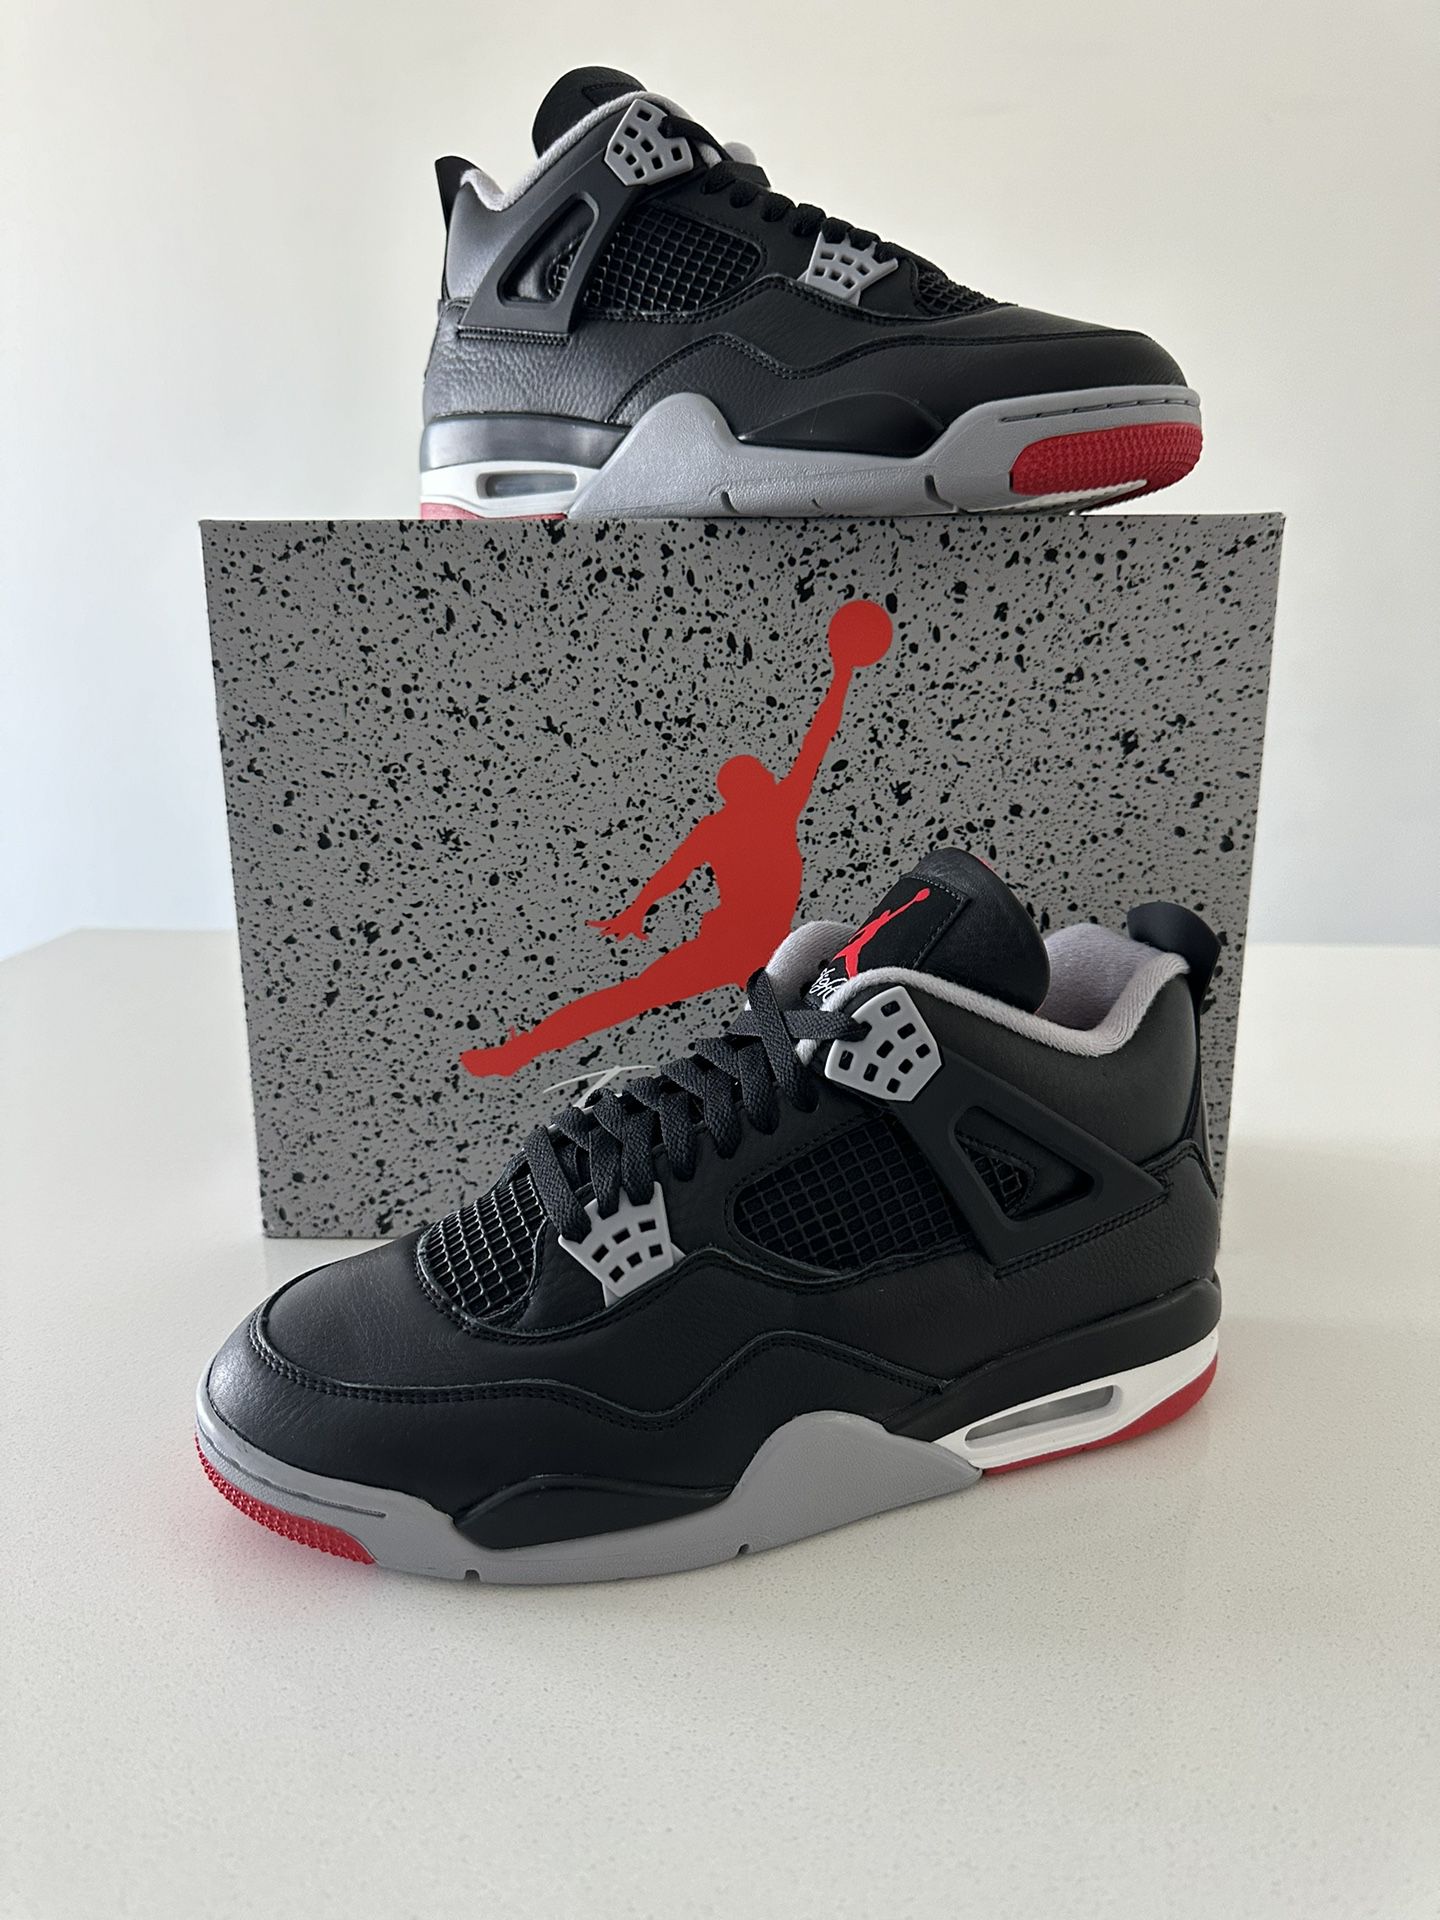 Nike Air Jordan 4 Retro “Bred Reimagined” (FV5029-006) Men’s Size 10 $310.00